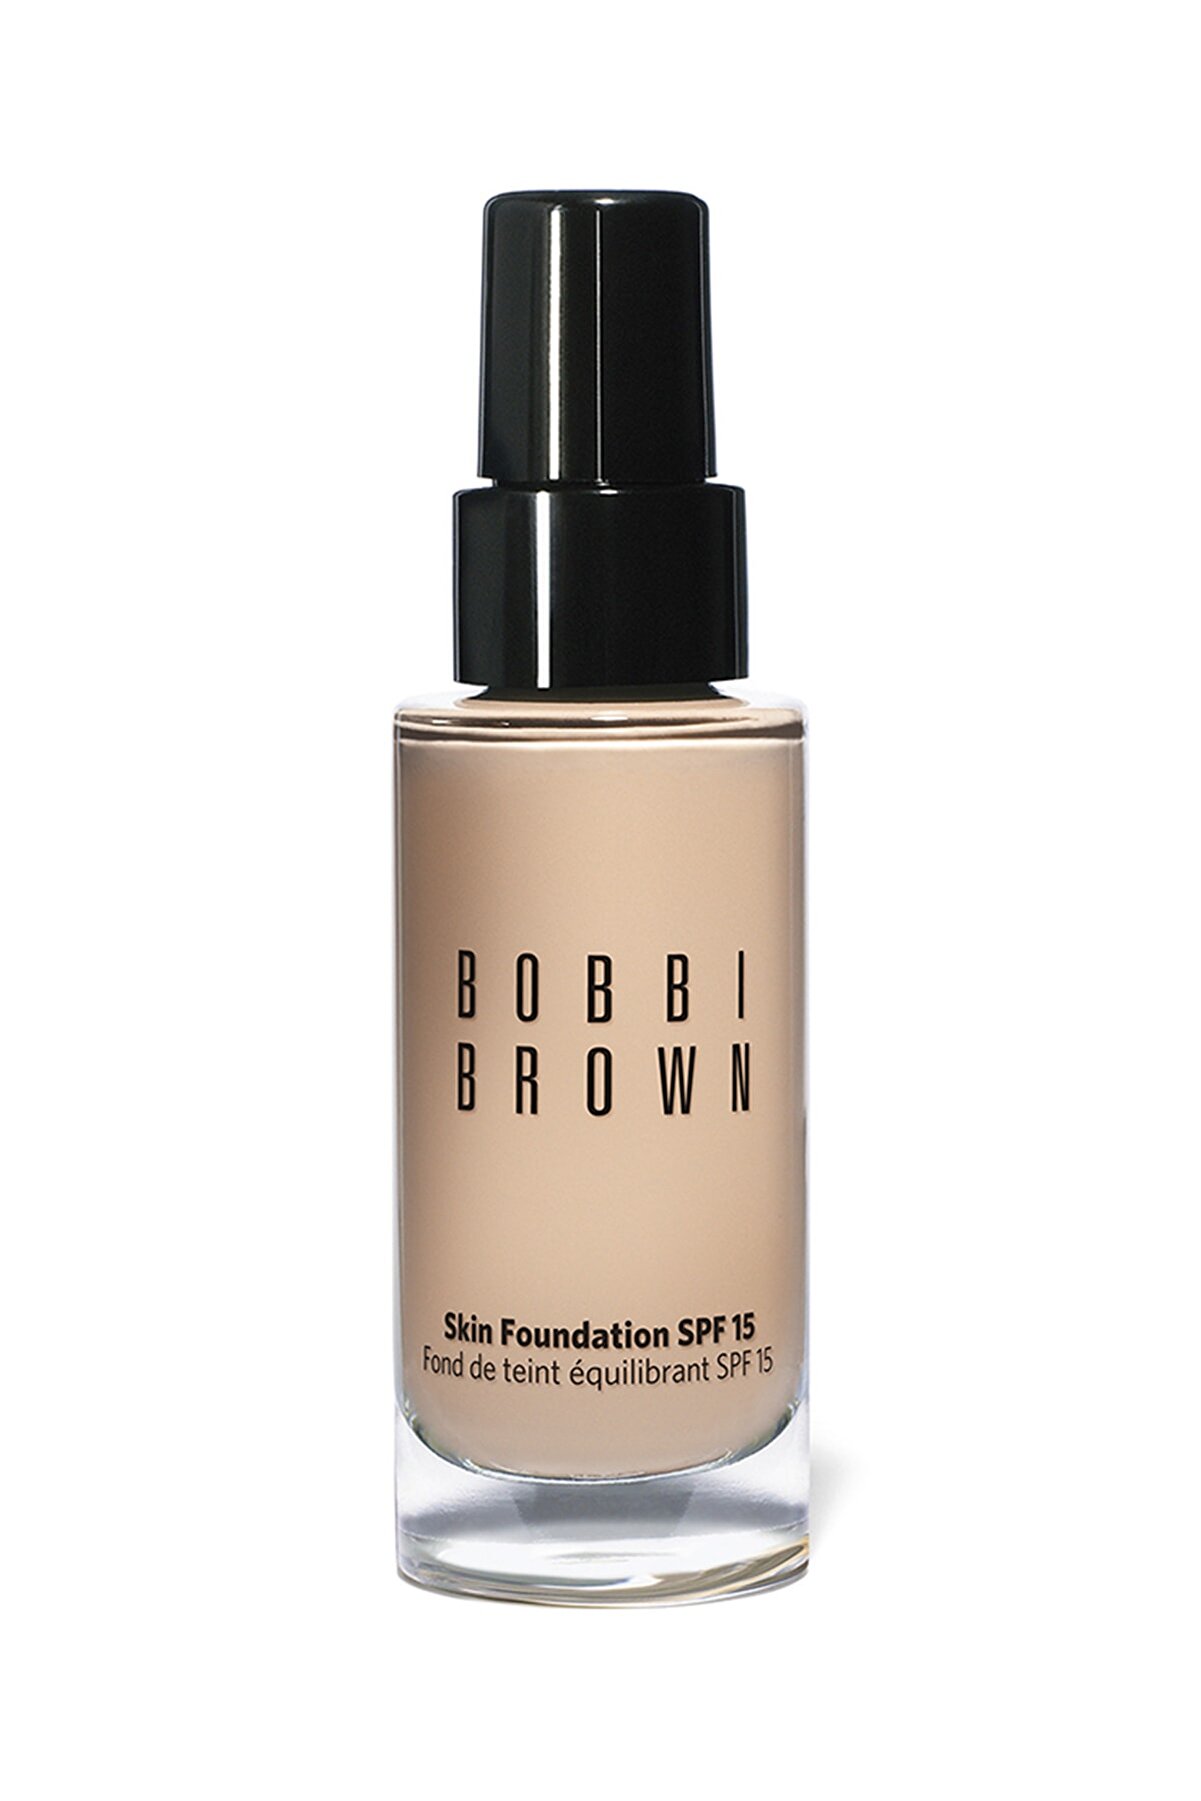 Bobbi Brown Skin Foundation Spf 15 / Fondöten 1.0 Fl Oz/30ml Ivory (C-024 / 0.75) 716170170343